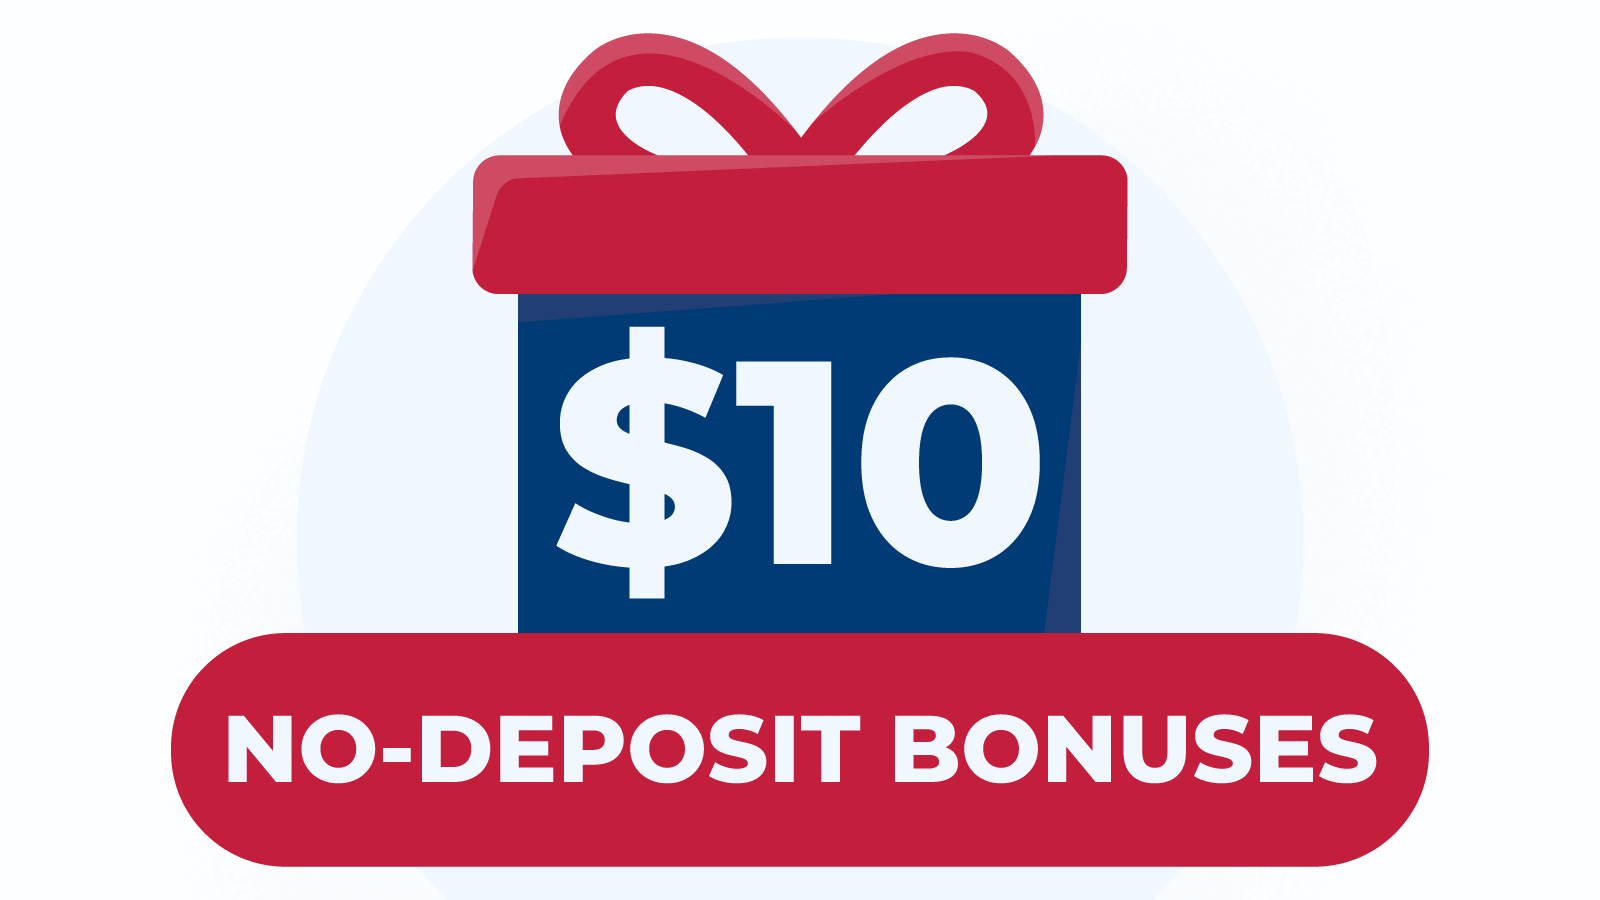 R$10 no-deposit bonuses